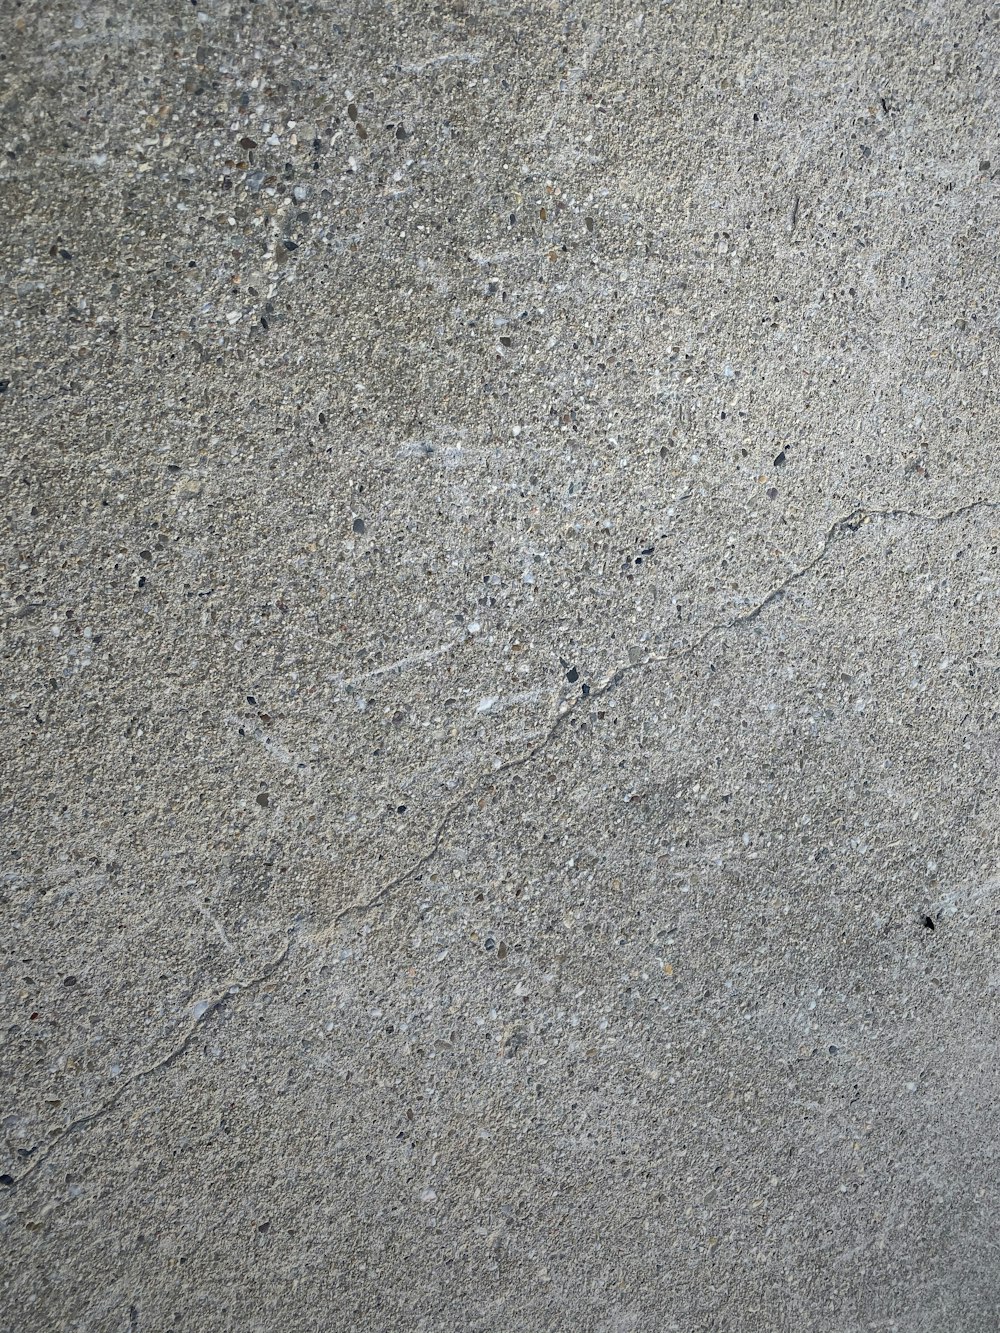 gray and white concrete floor